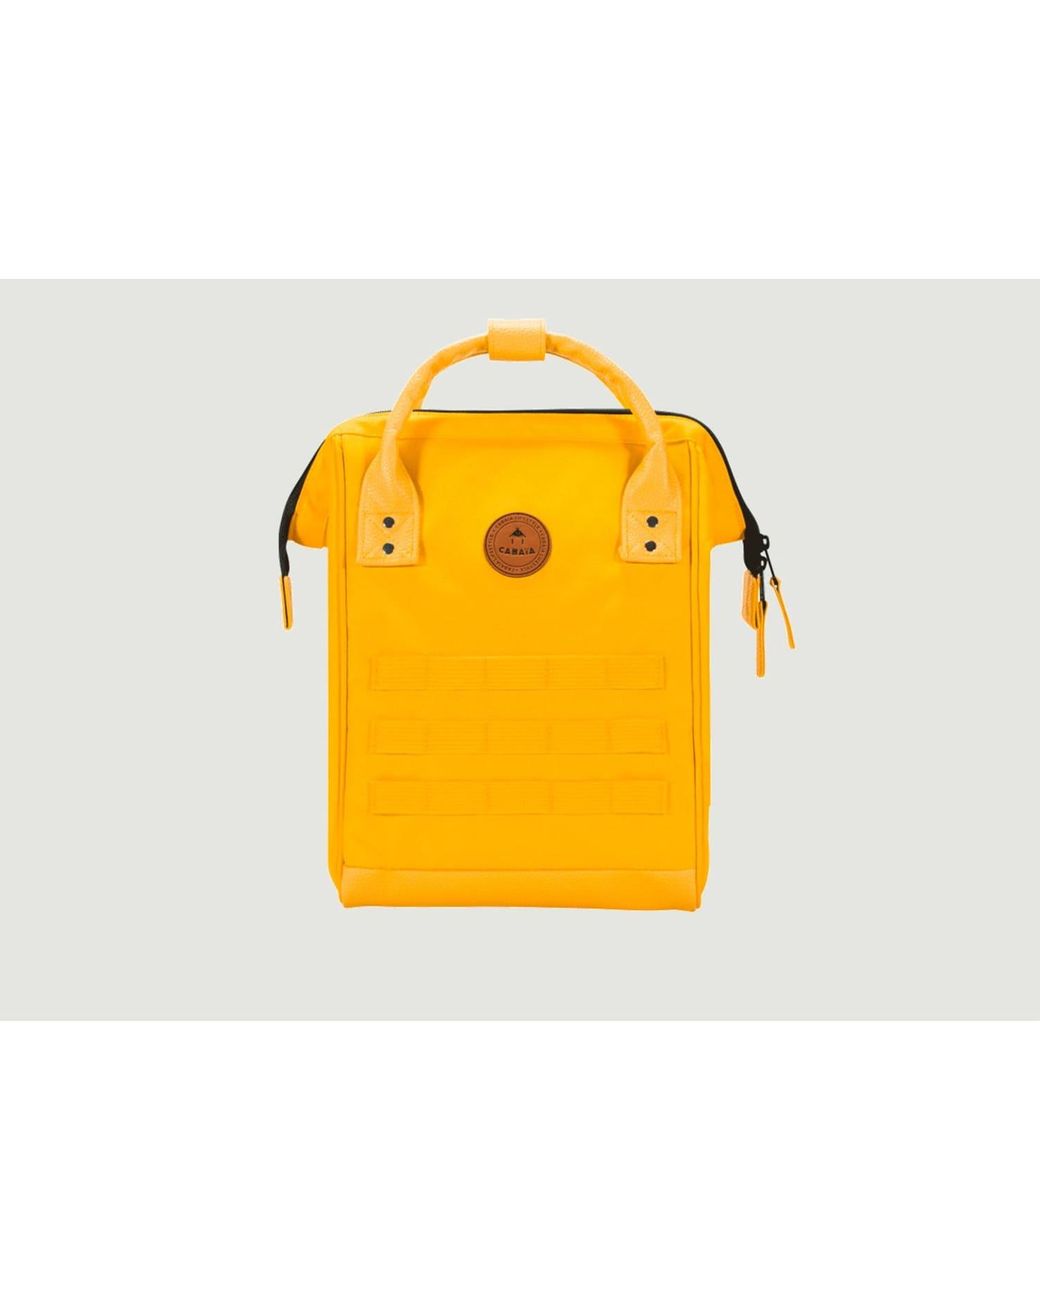 Cabaïa Adventurer Marrakech Small Backpack in Yellow | Lyst